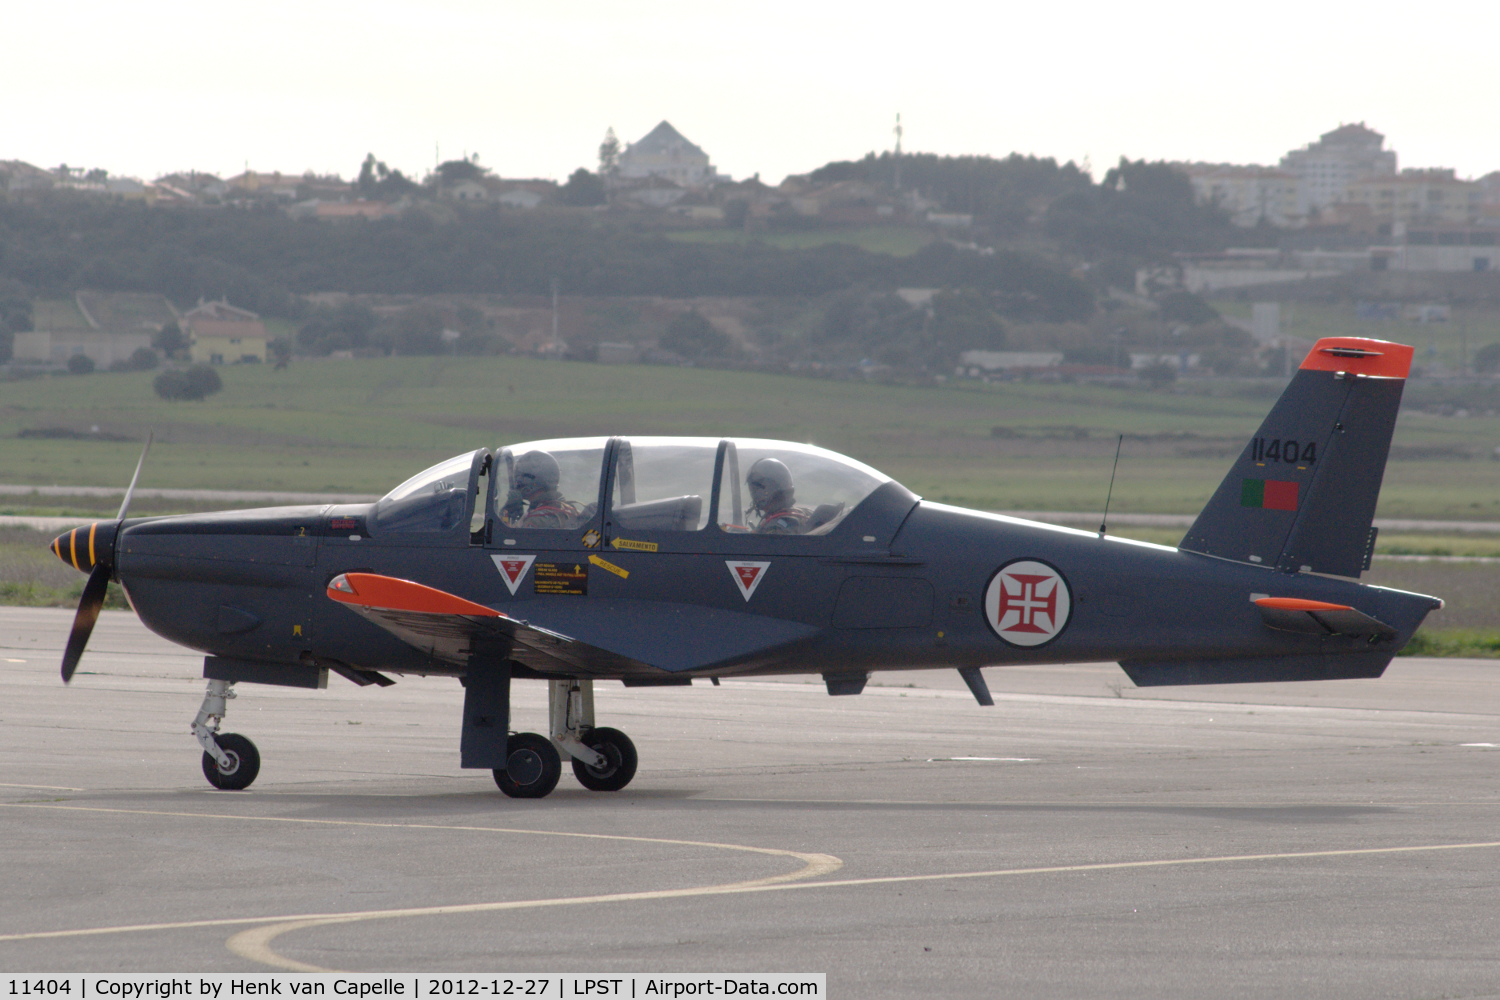 11404, Socata TB-30 Epsilon C/N 161, An Epsilon trainer of the Portuguese Air Force taxying at Sintra air force base.